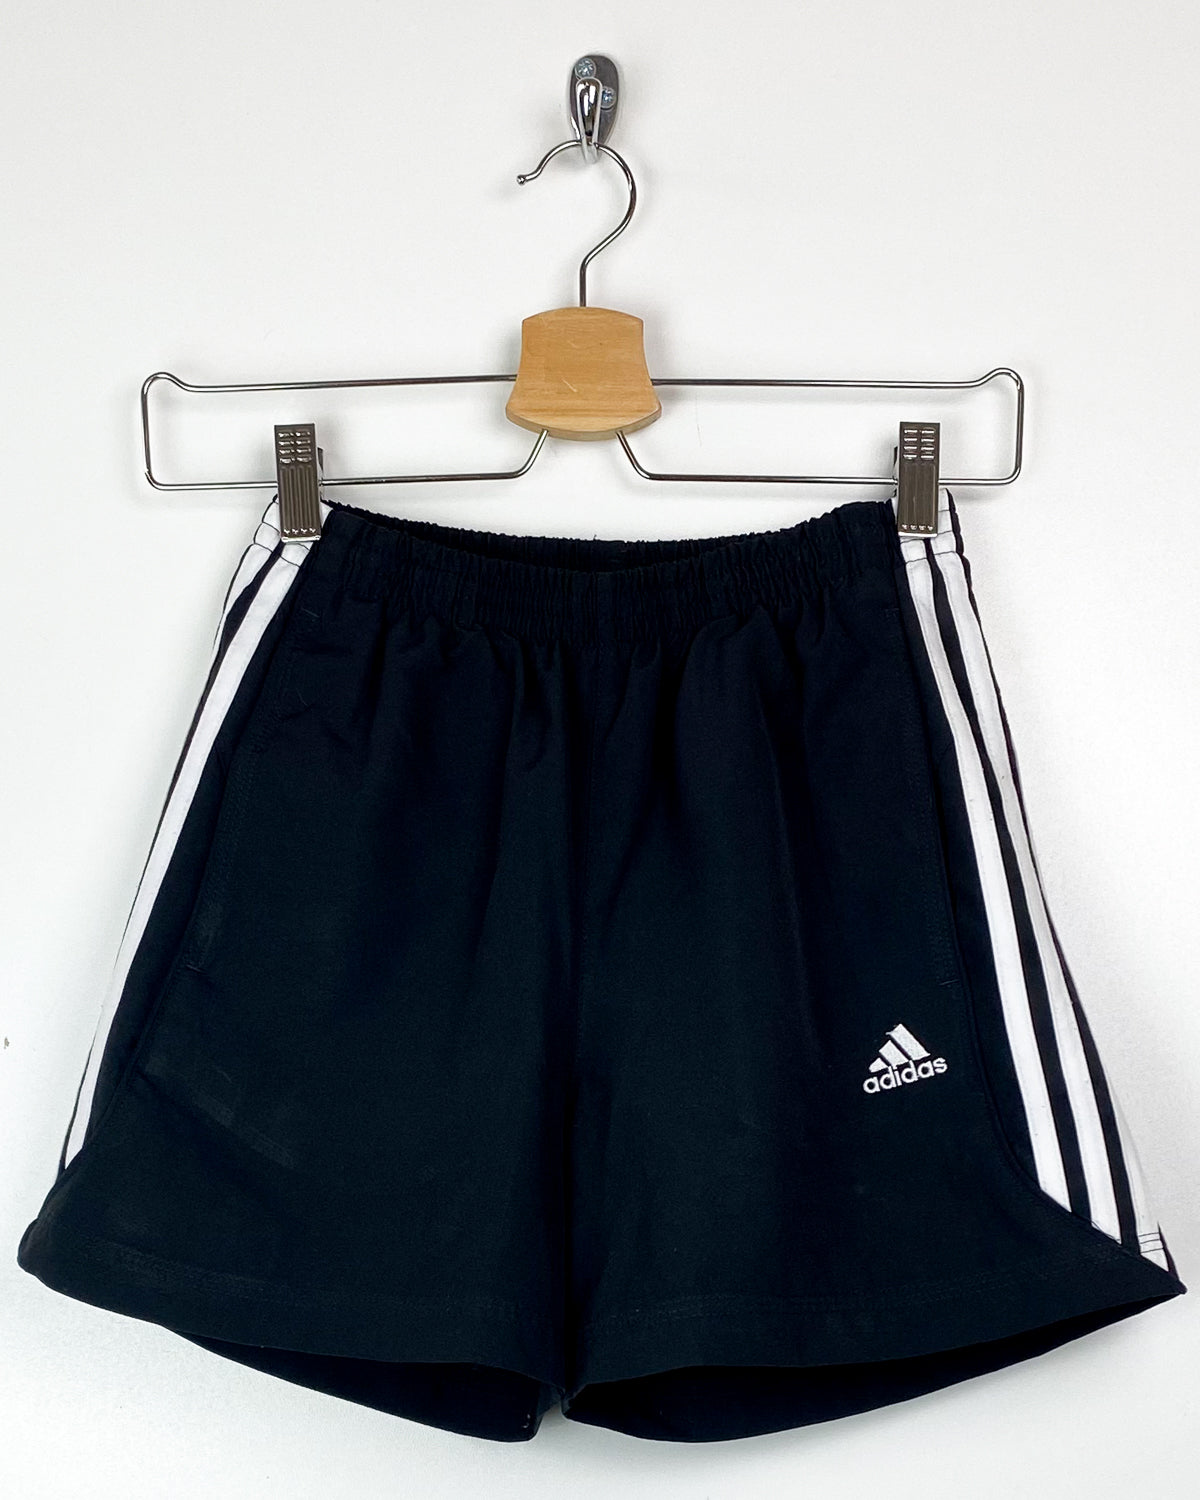 Adidas - Shorts Sportivi Taglia S